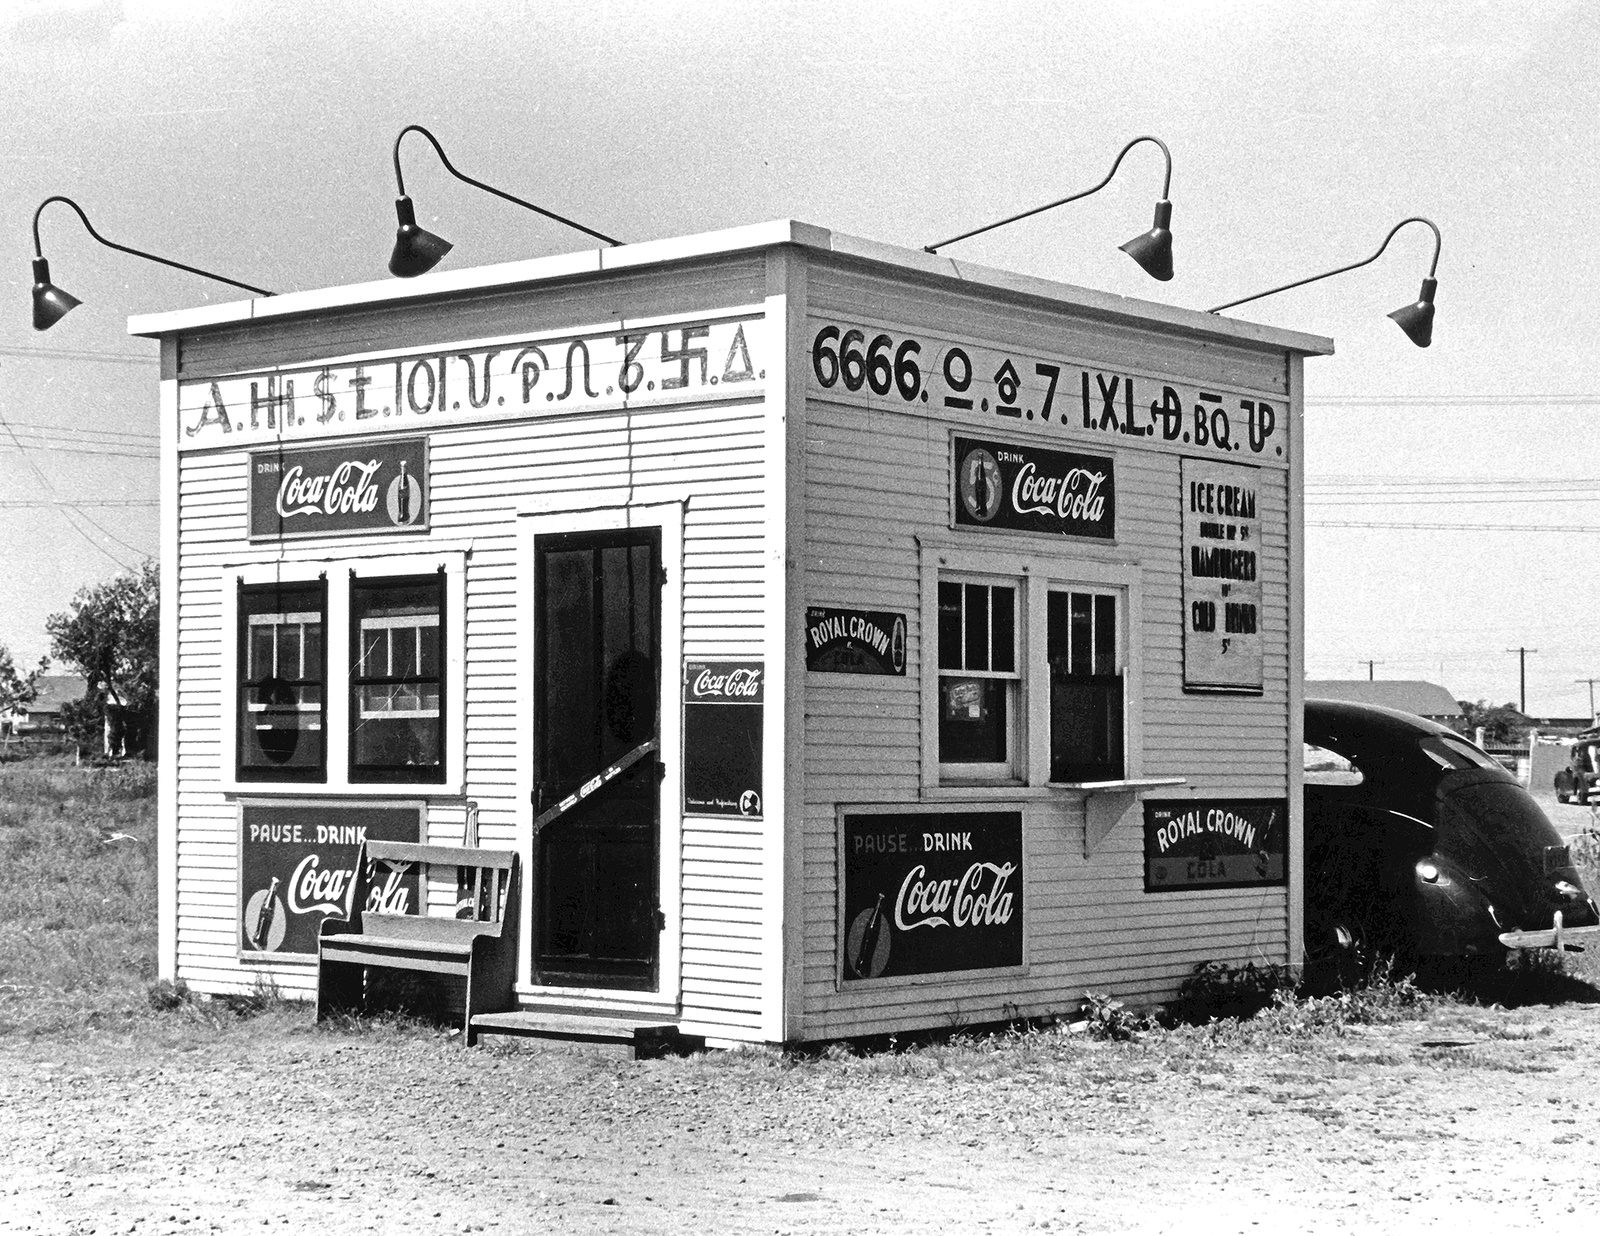 Hamburger Stand in Dumas in 1939